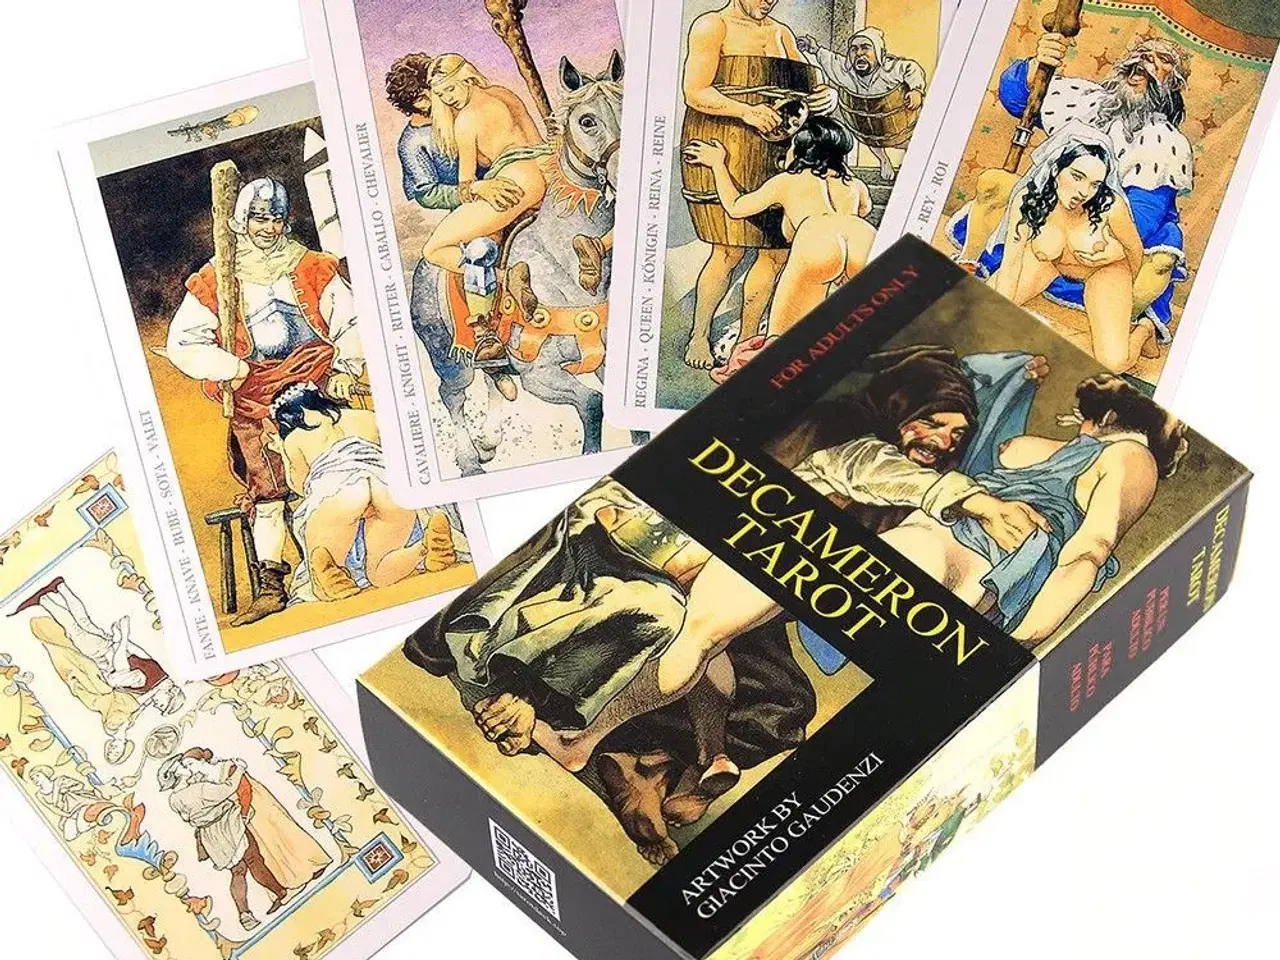 Billede 10 - Tarot kort med erotiske tegninger